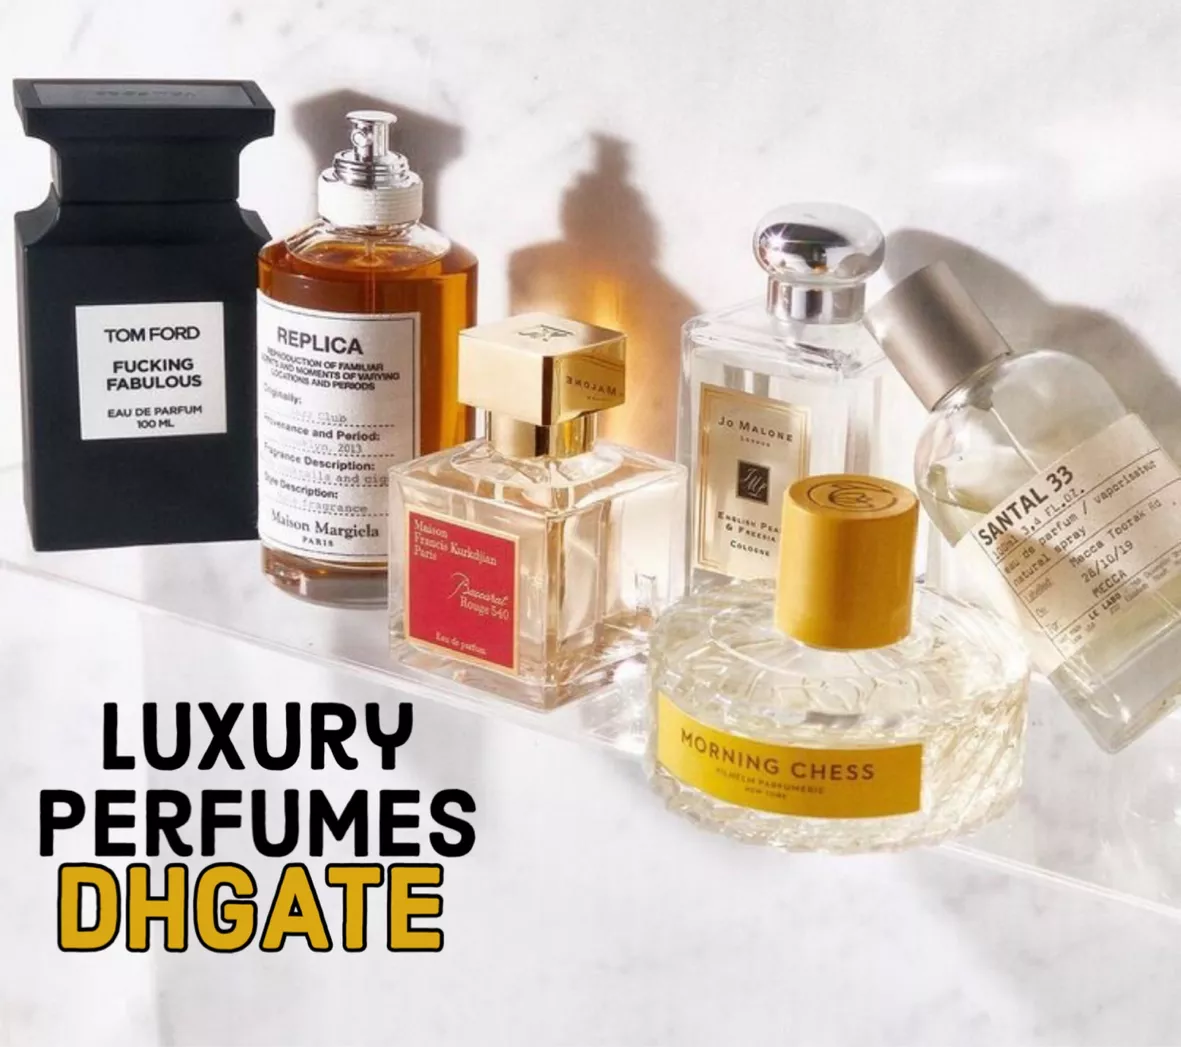 SALE! LV perfume (see description for available fragrances for men